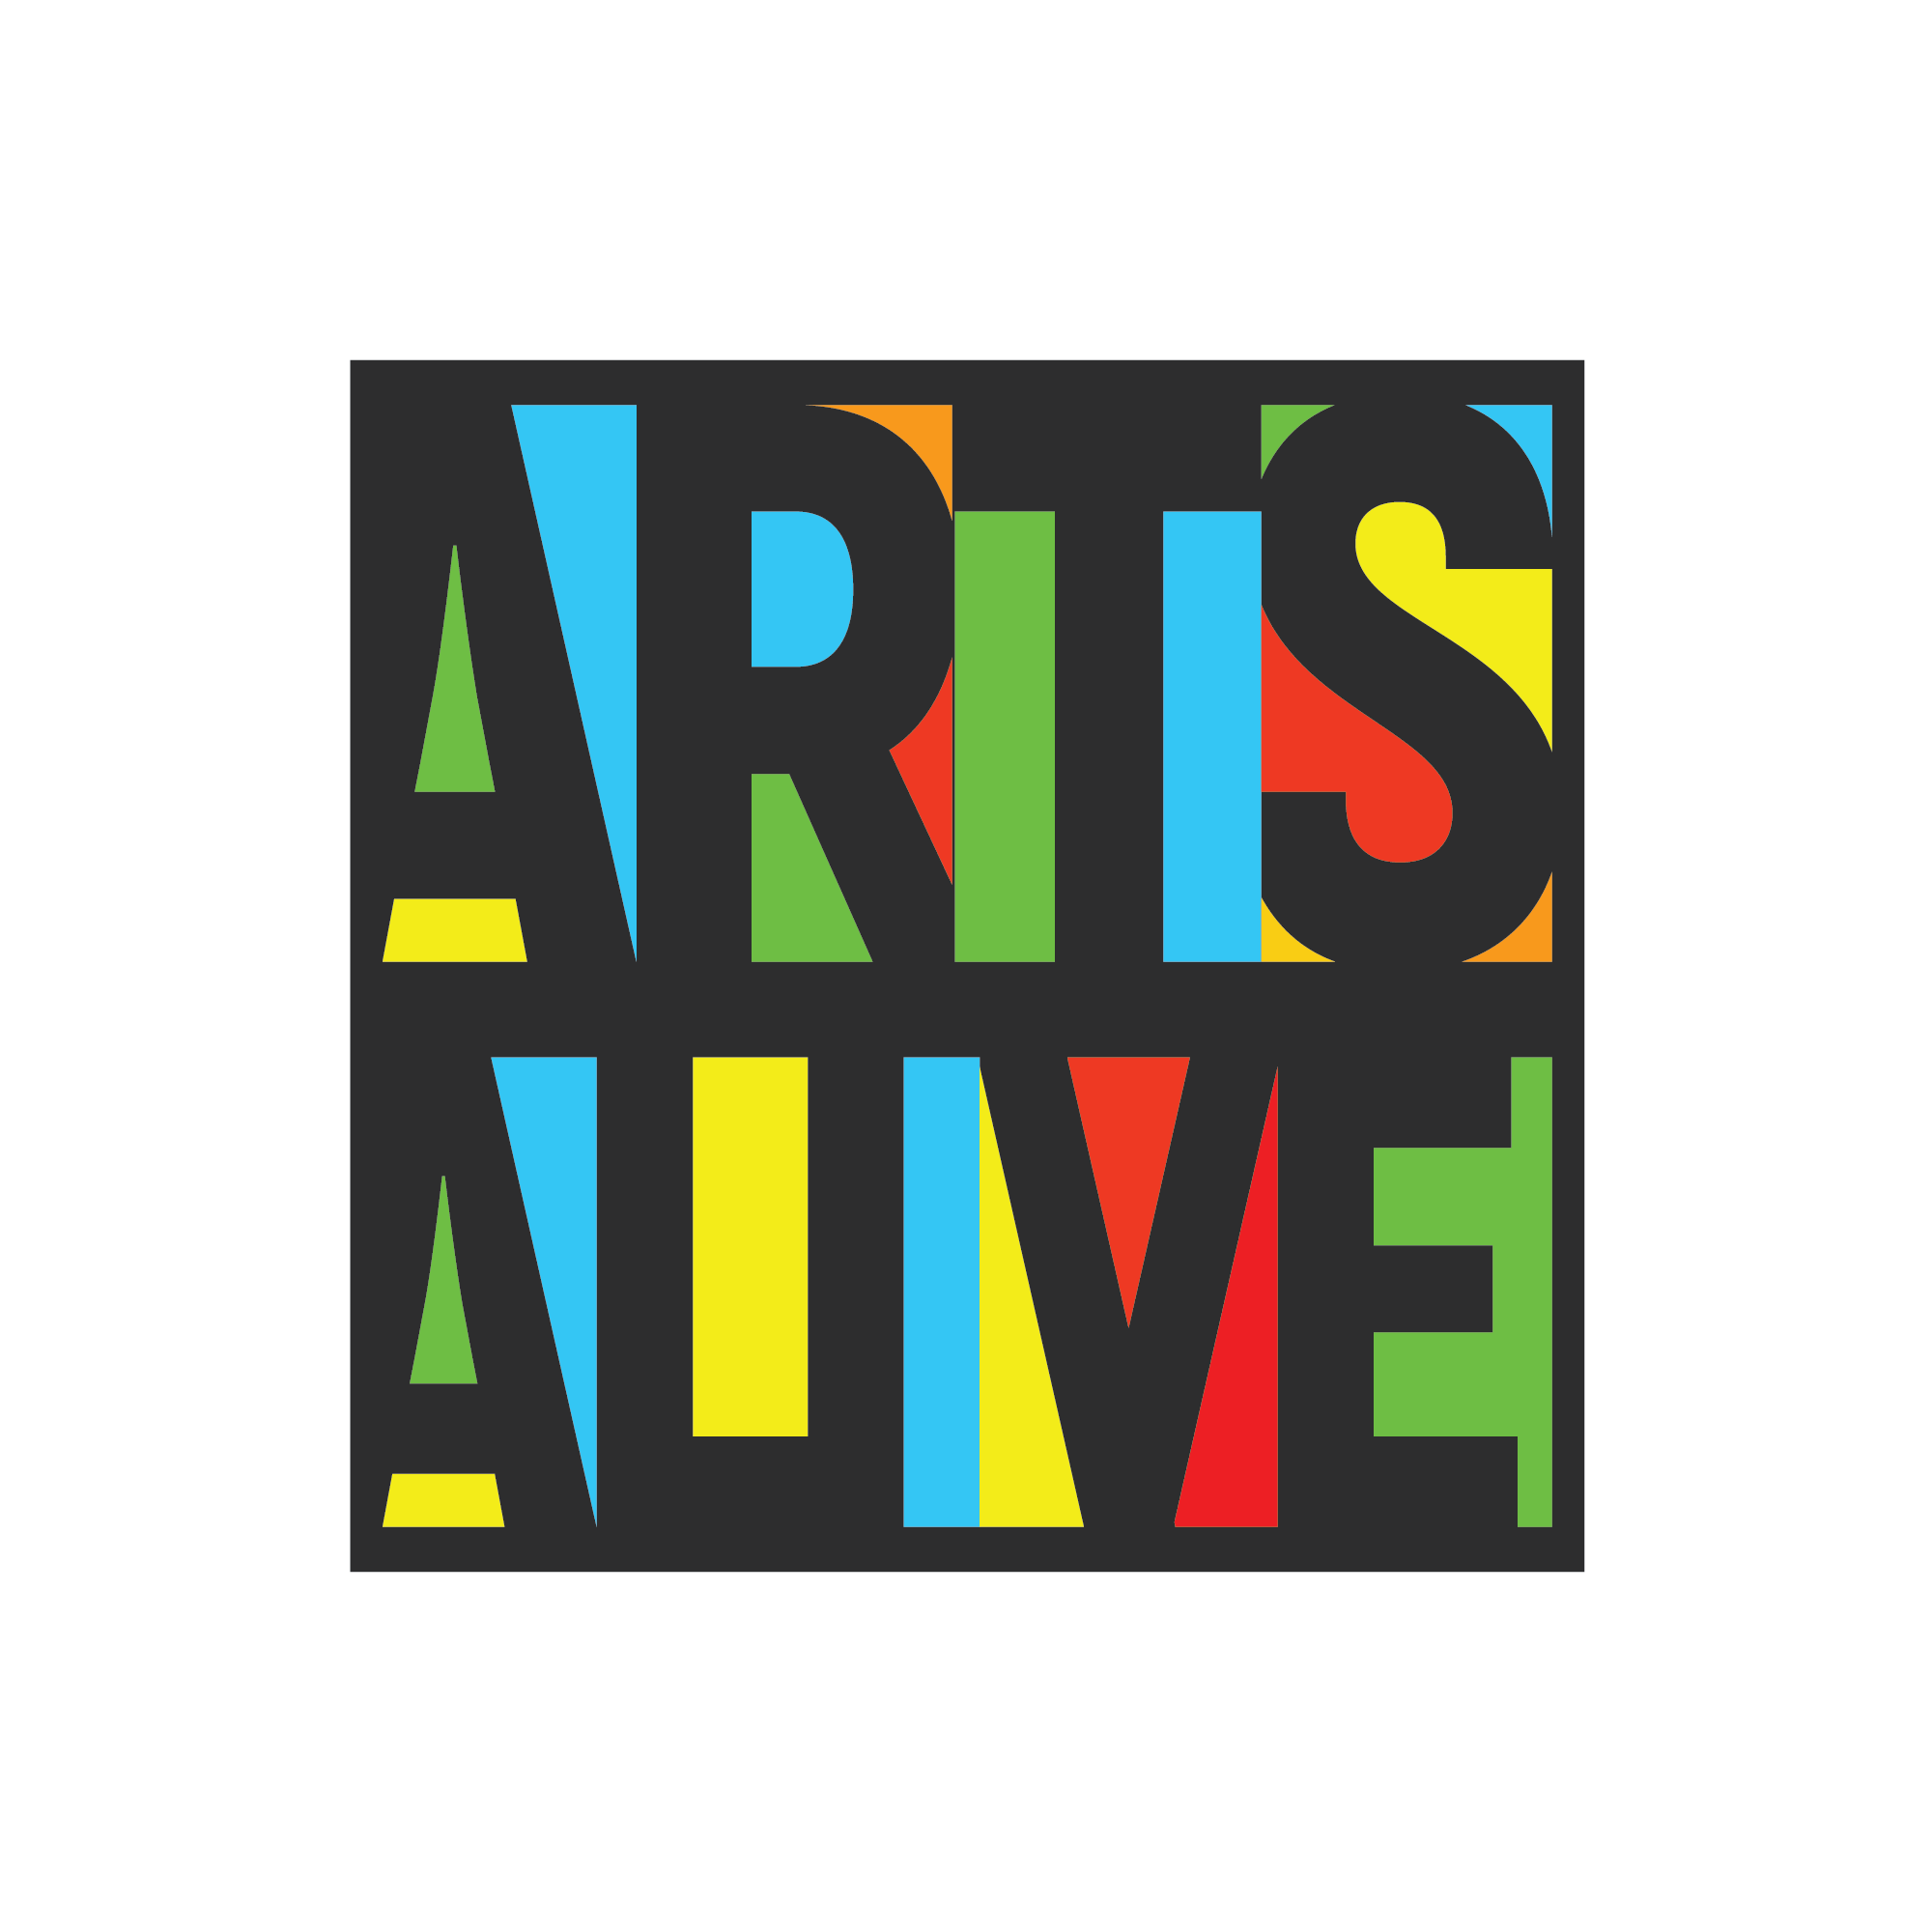 Petaluma Arts Alive 
Every Third Thursday 
5pm - 7pm